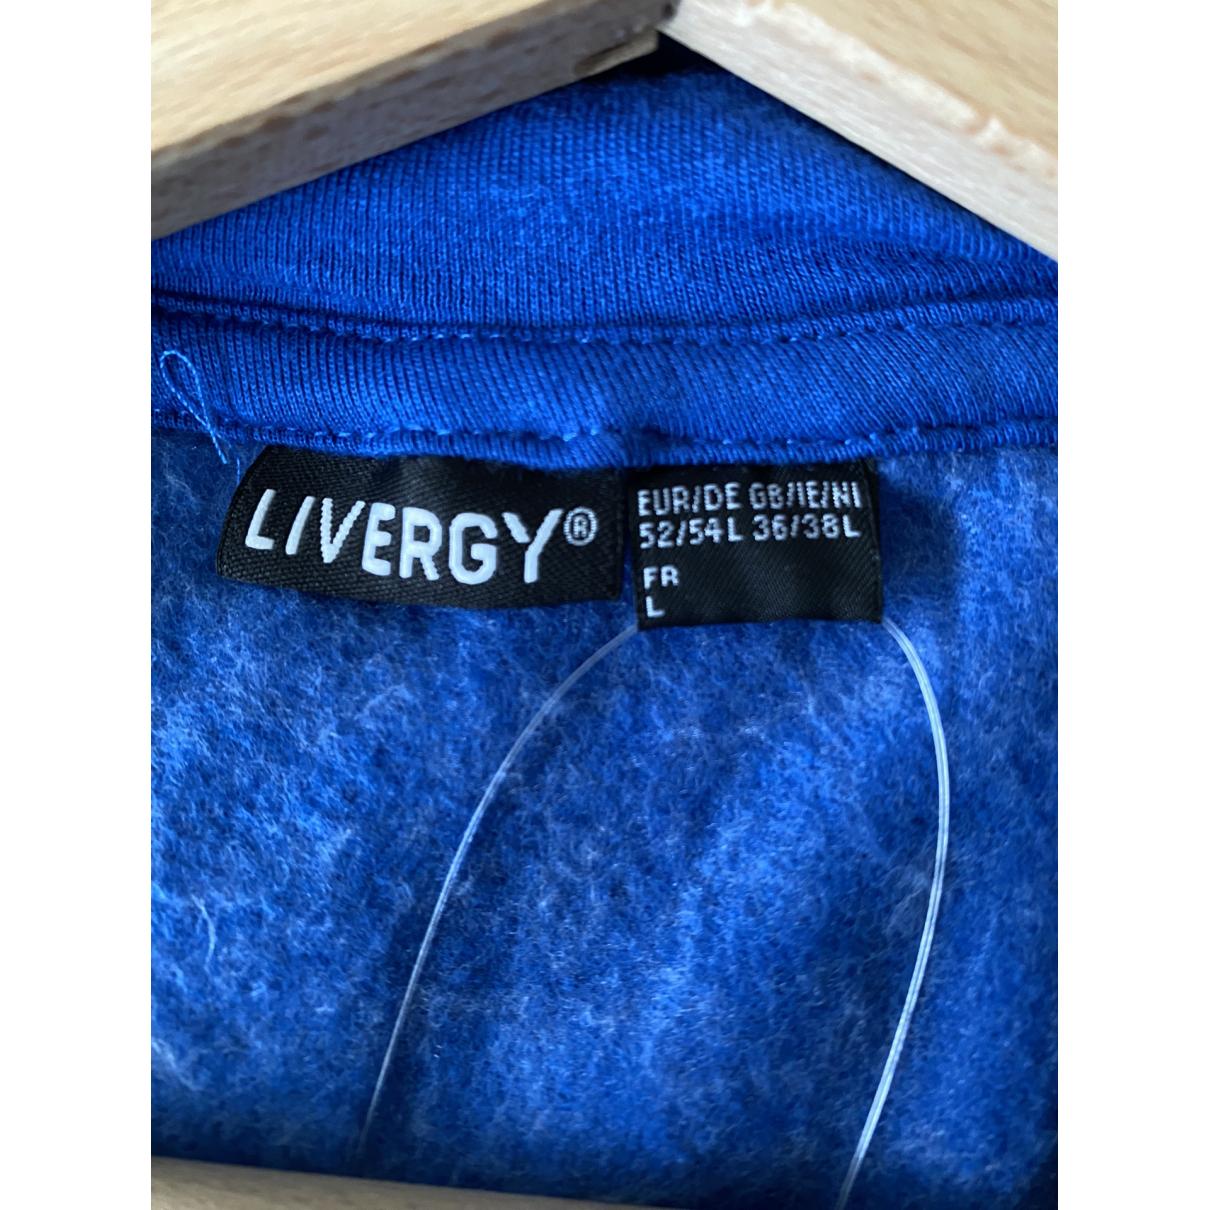 L in - Blue Lidl Sweatshirt International size 29383561 Cotton